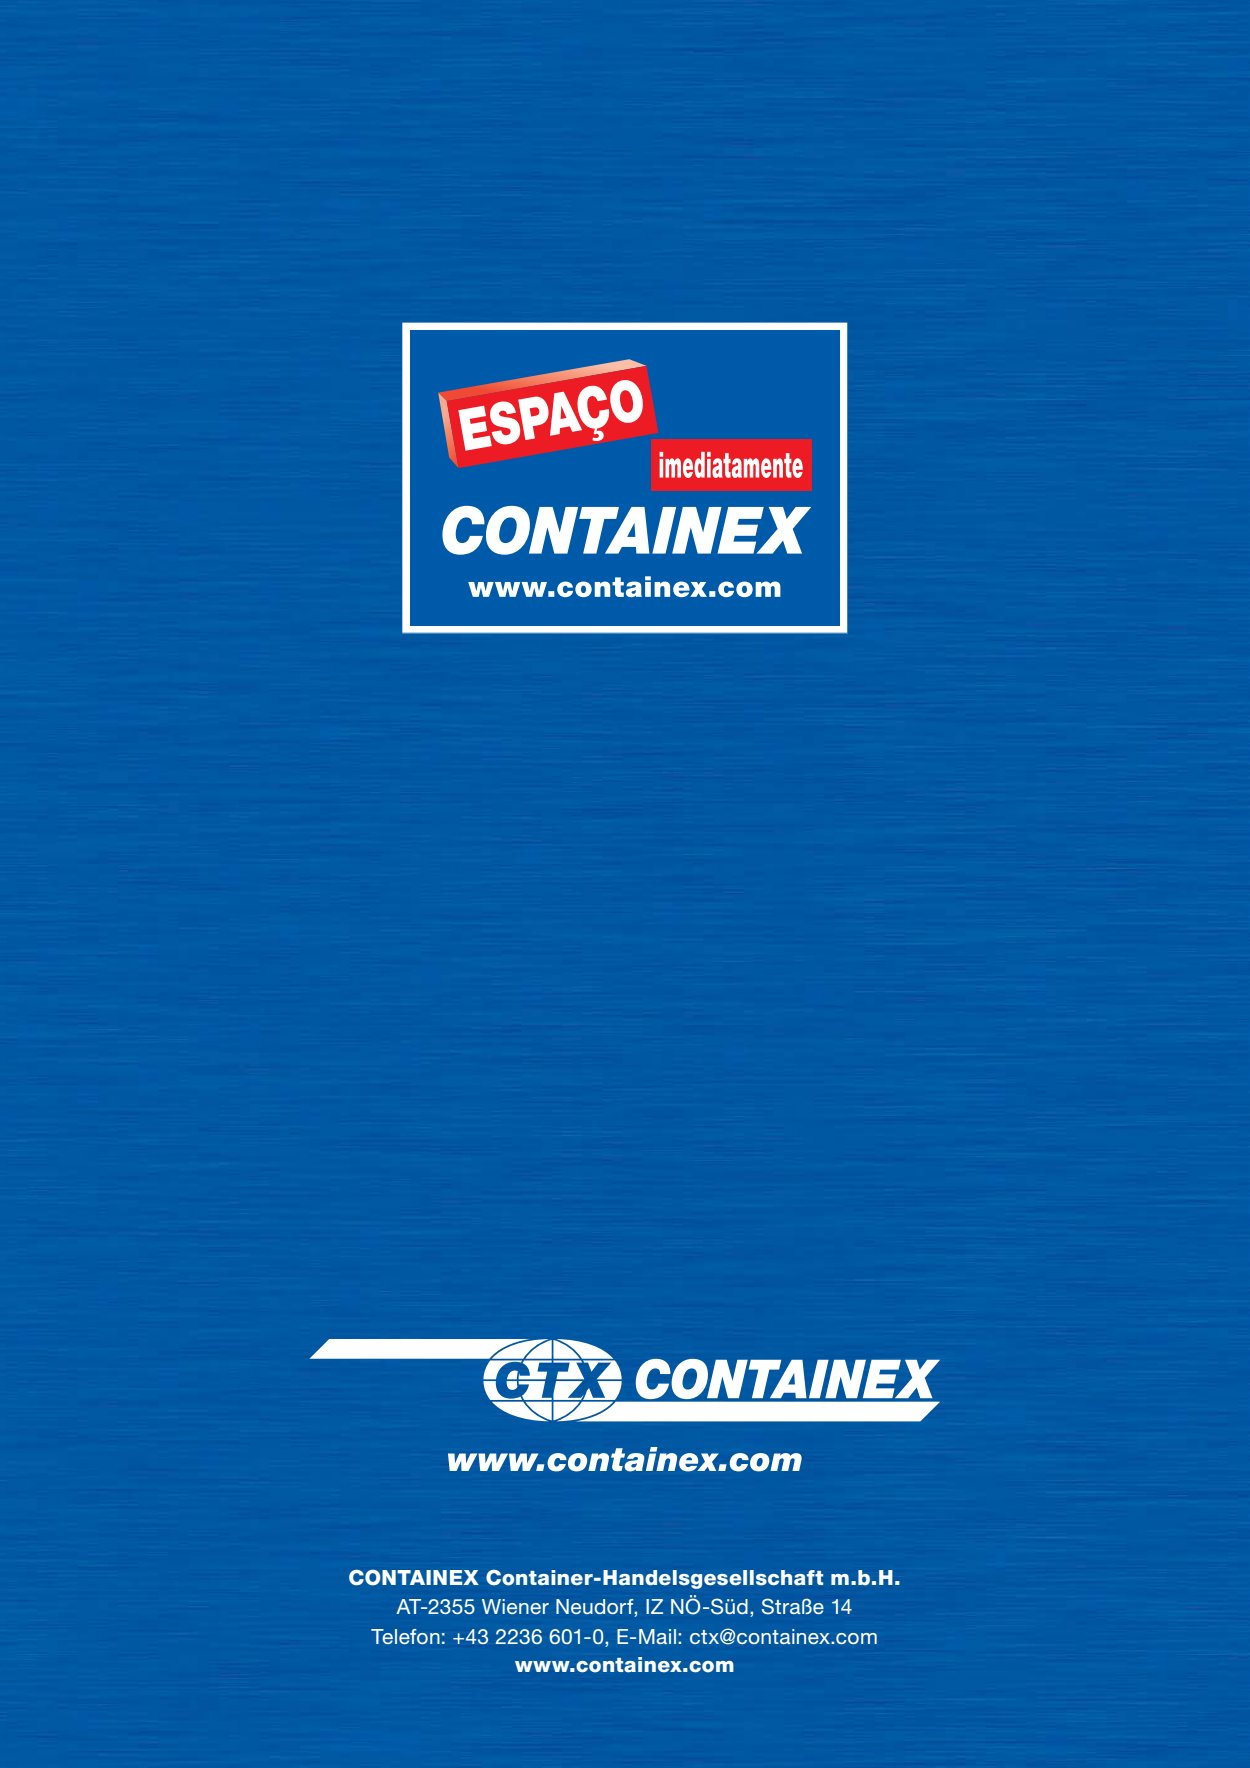 CONTAINEX Container-Handelsgesellschaft LHQHU